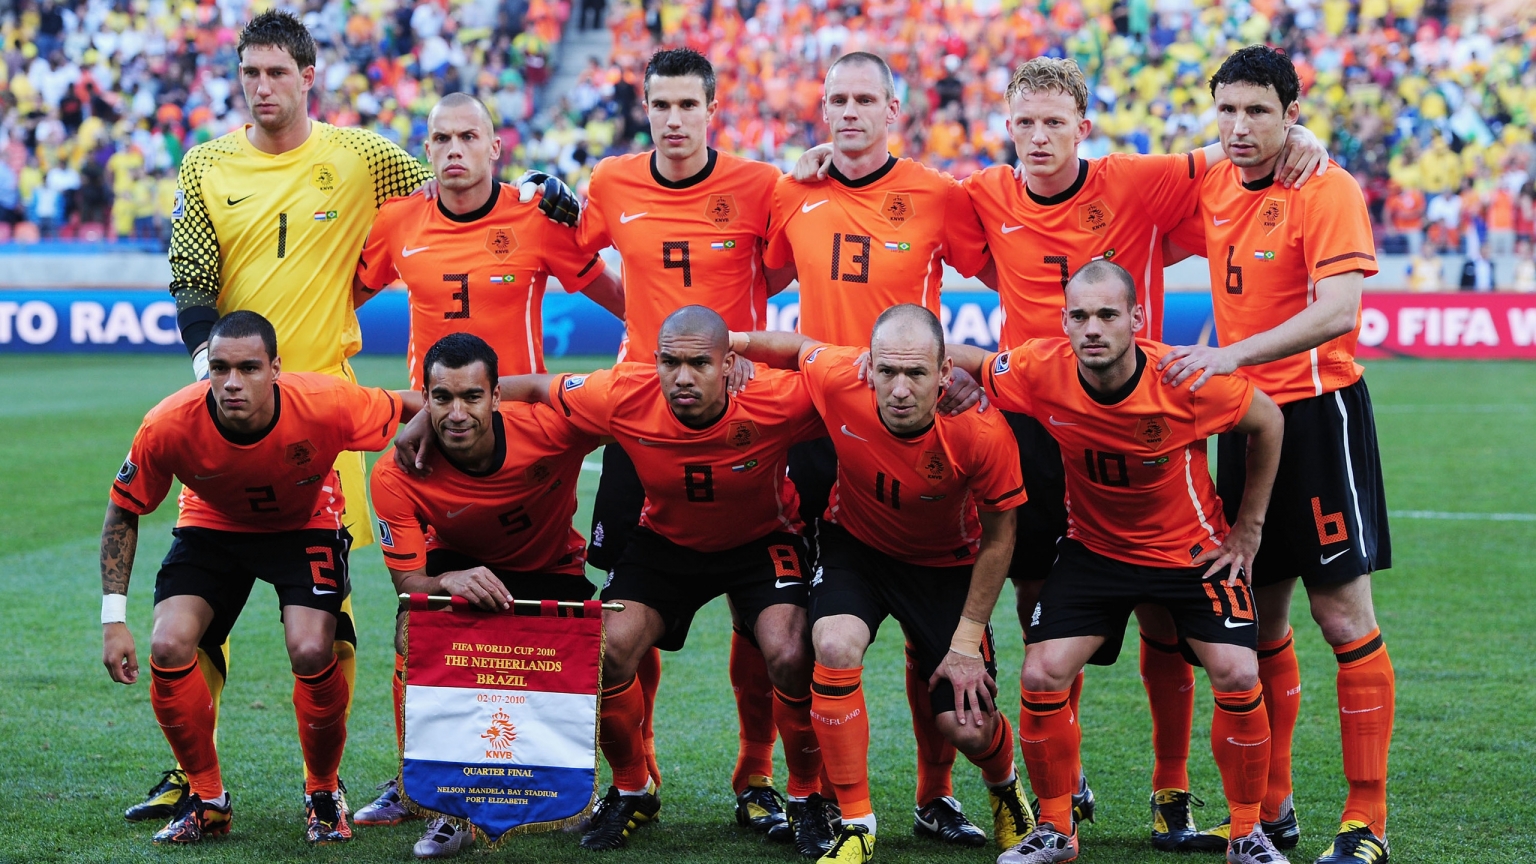 Football Holland Team for 1536 x 864 HDTV resolution